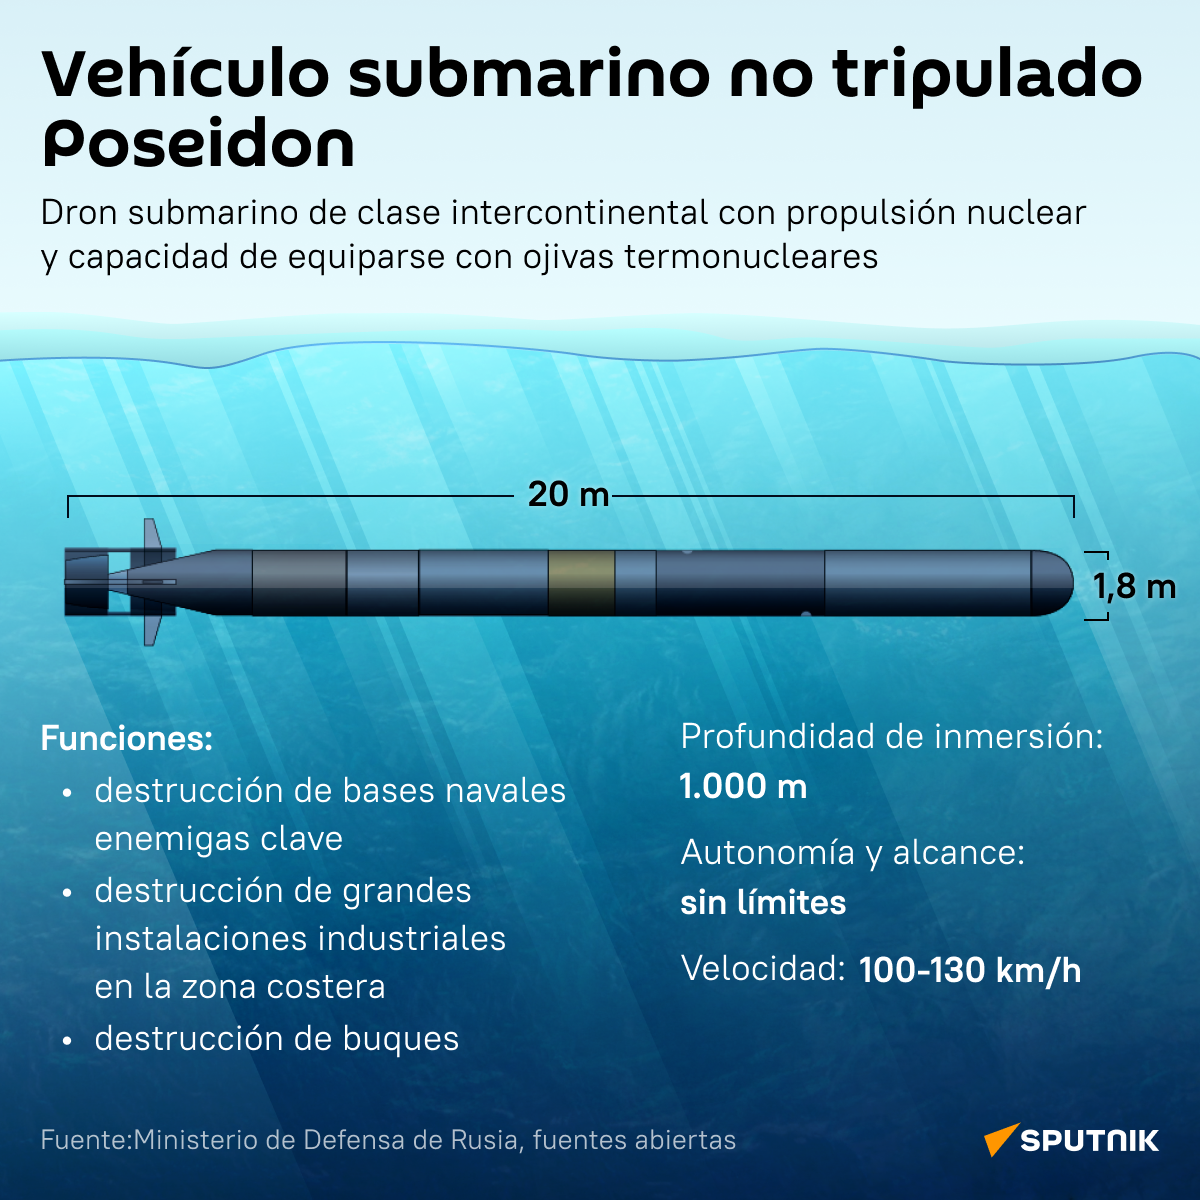 Vehículo submarino no tripulado Poseidon - Sputnik Mundo